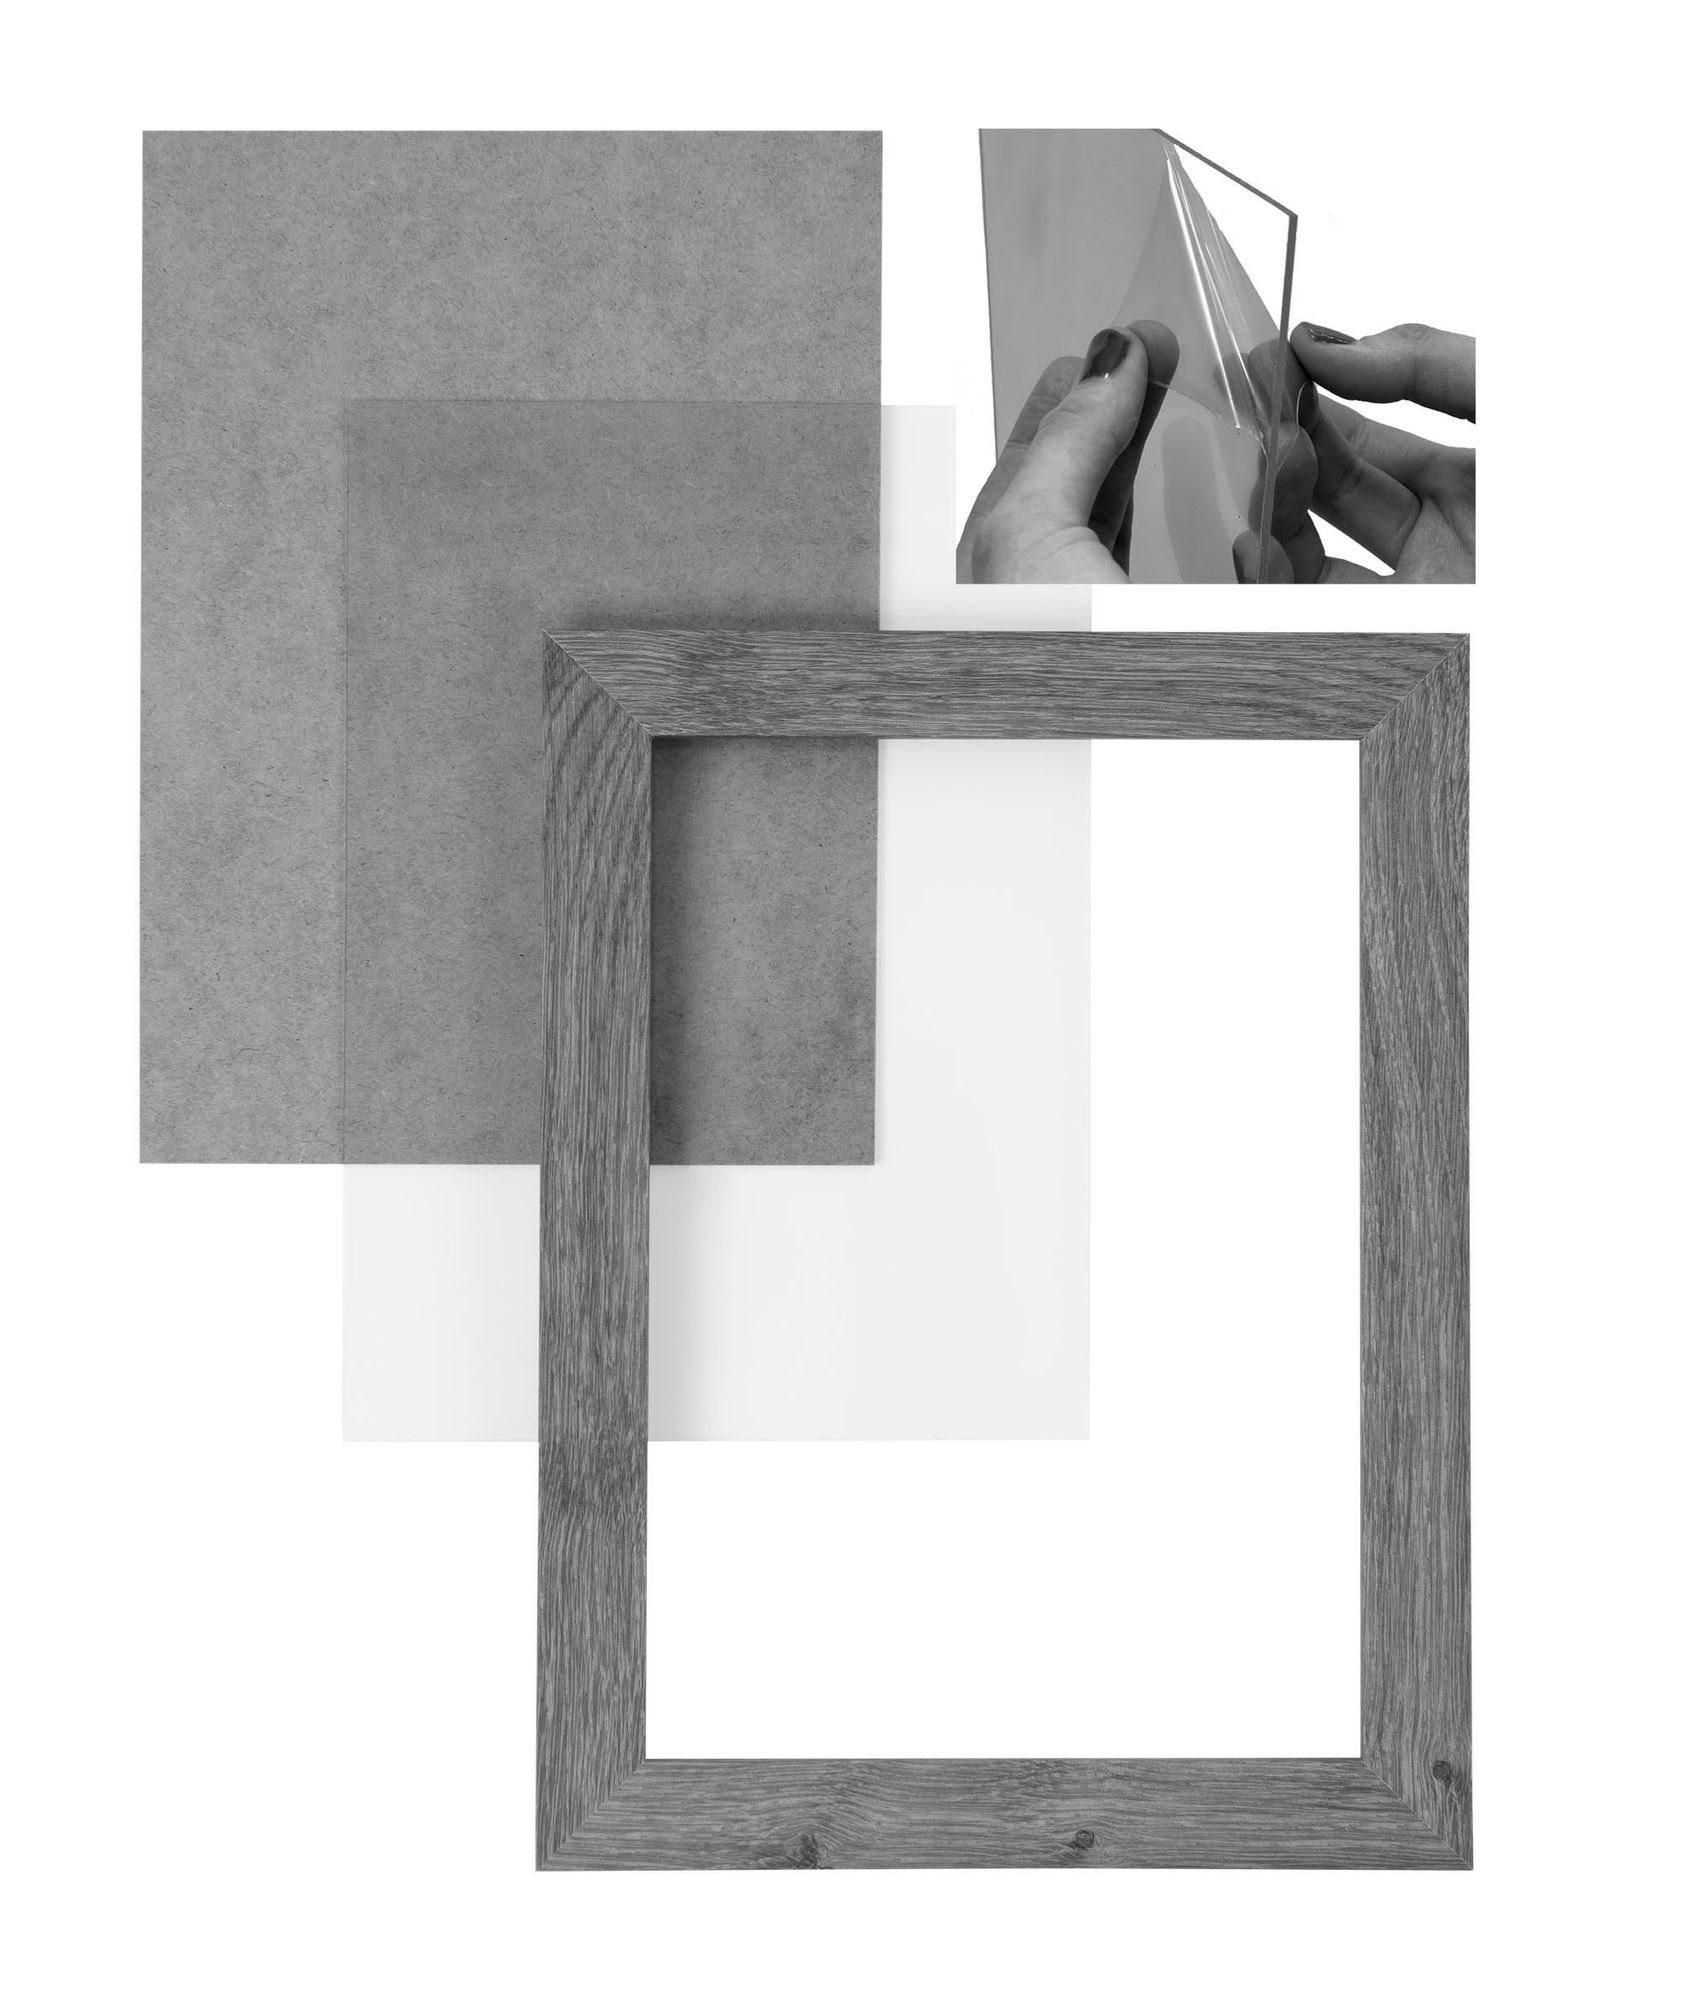 Bilderrahmen Holz CLAMARO in MDF Rückwand Clamaro und nach Aufhänger 35x100 Bilderrahmen Rahmen eckiger Acrylglas, Moderner Maß silber inkl. 'Collage' gebürstet FSC® handgefertigt